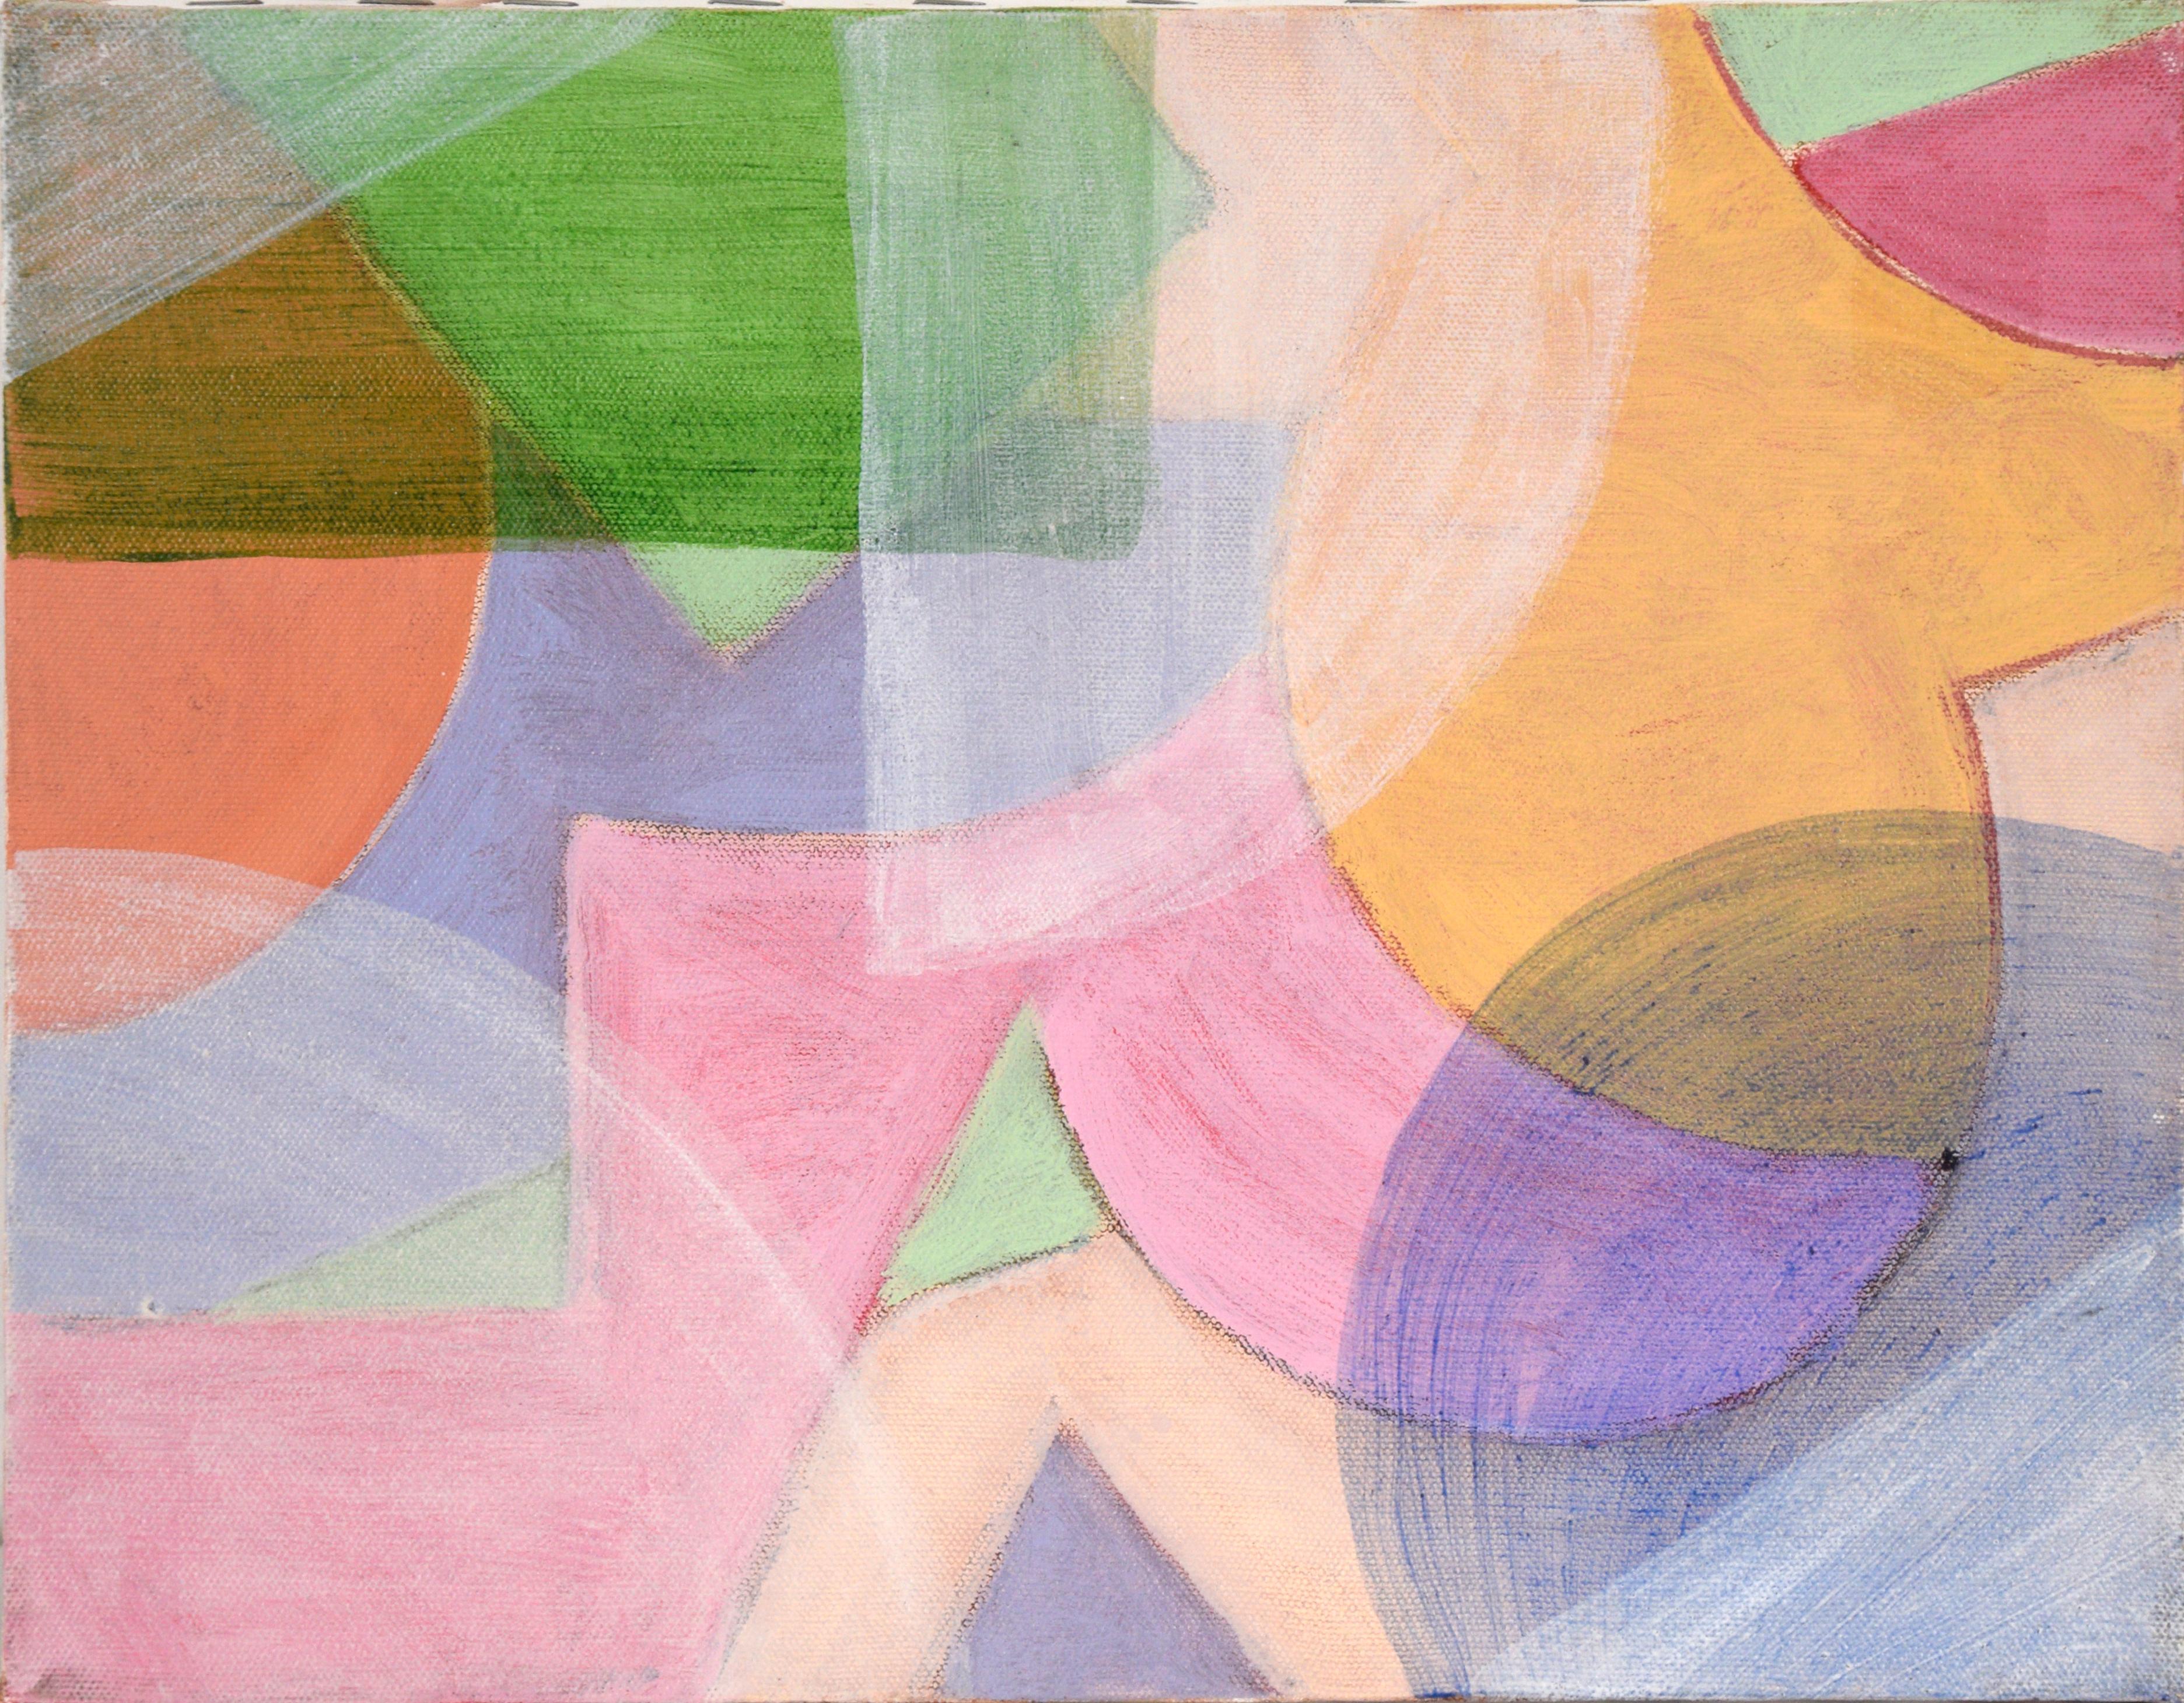 Abstract Painting Rod Norman - « Abstract Morning Light », composition géométrique en acrylique sur toile